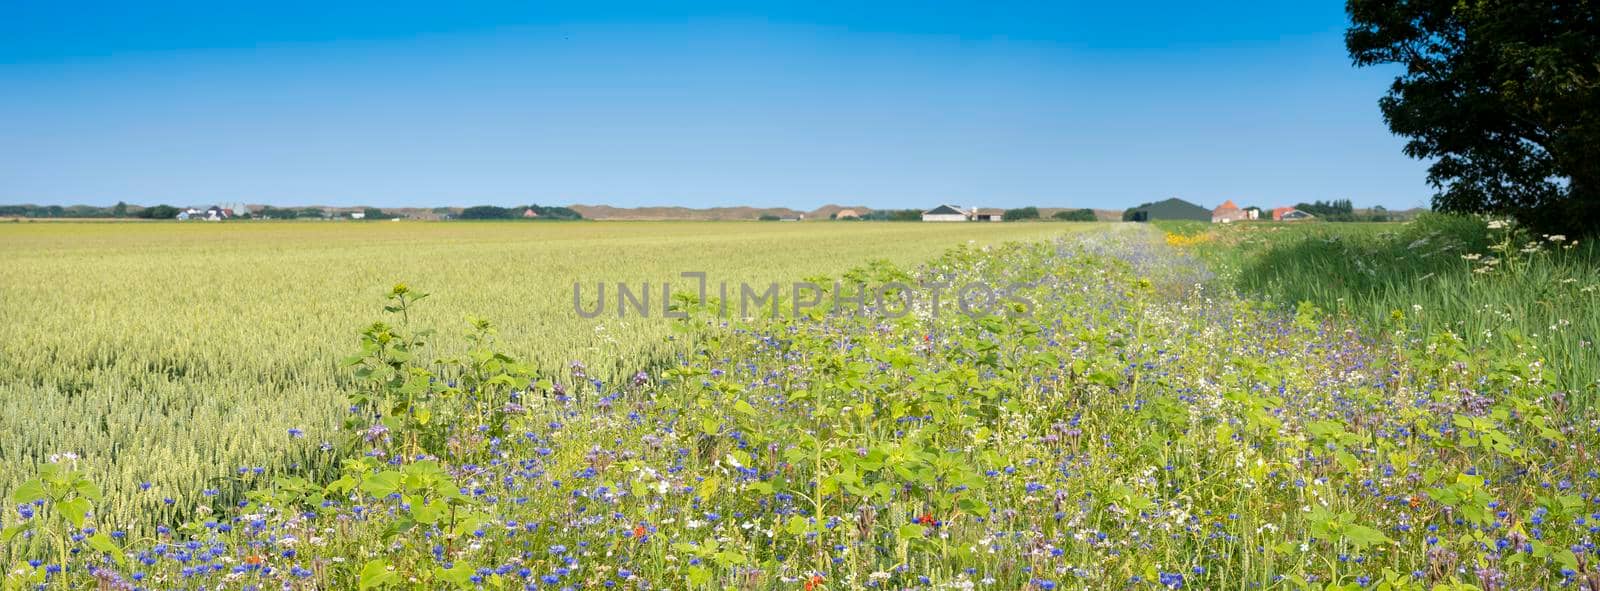 corn field and summer flowers under blue sky on the dutch island of texel under blue summer sky by ahavelaar